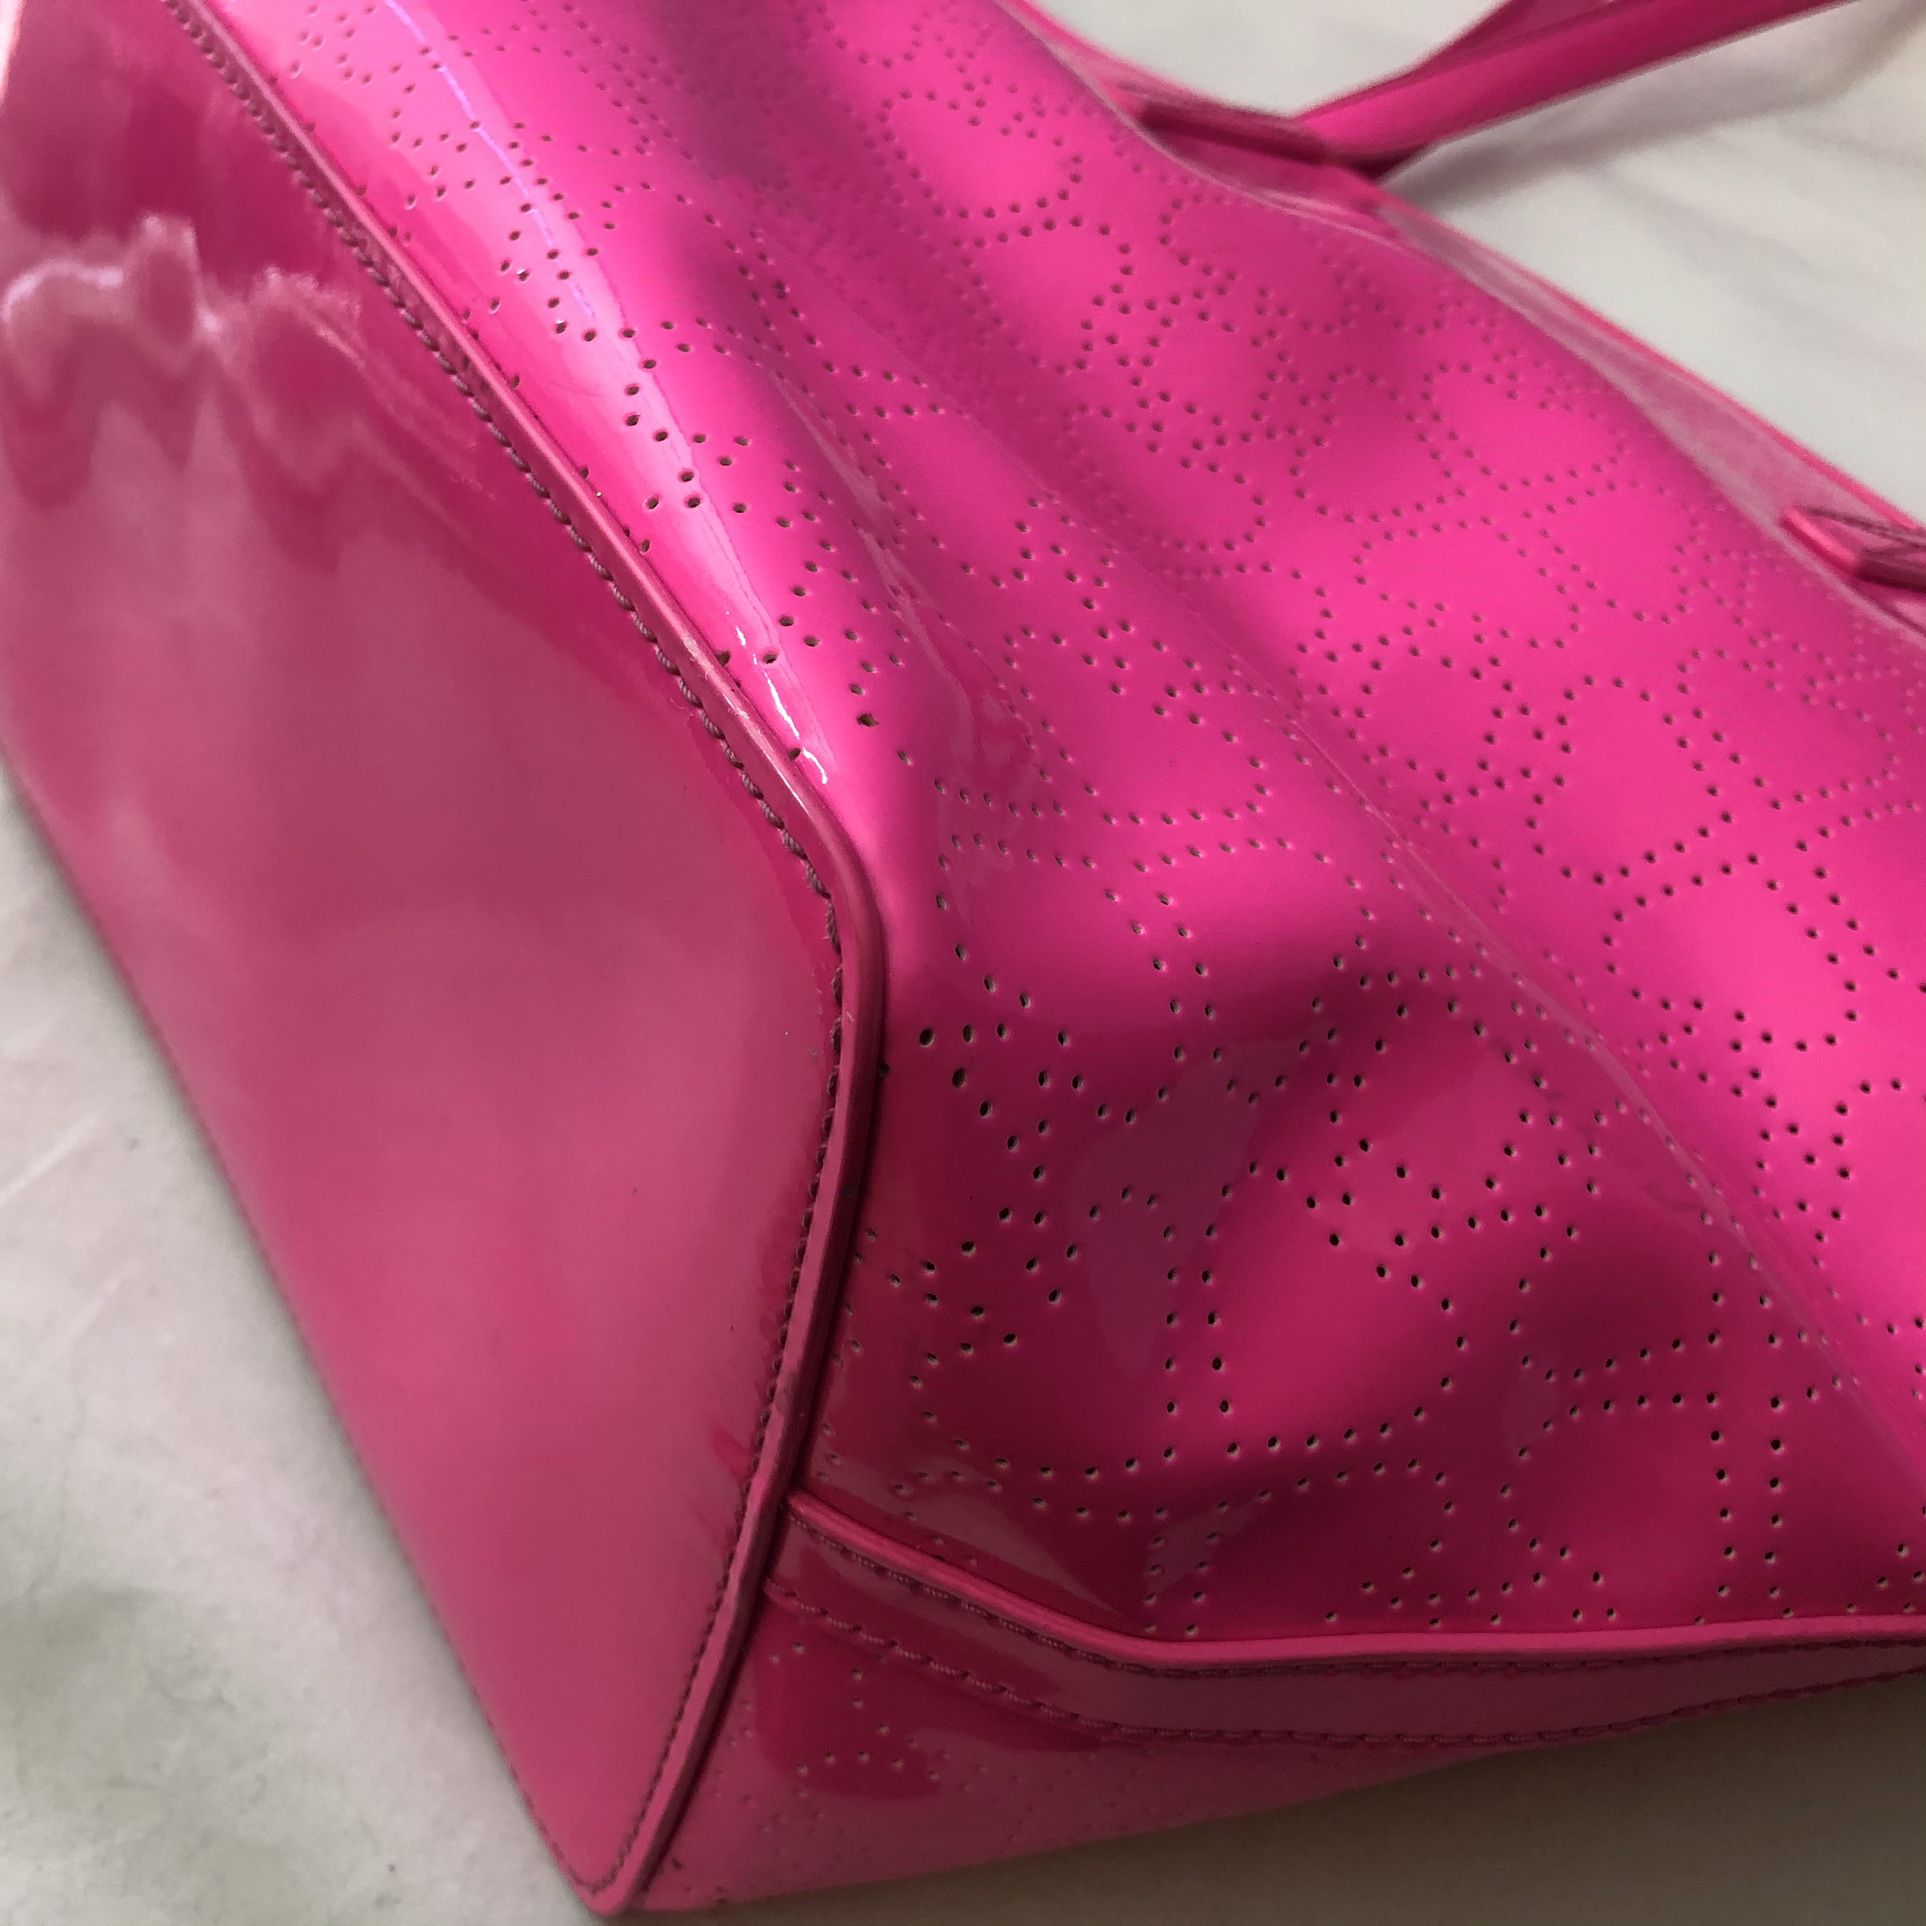 Versace Logo Neon Pink Tote Bag Set for Sale in Boca Raton, FL - OfferUp